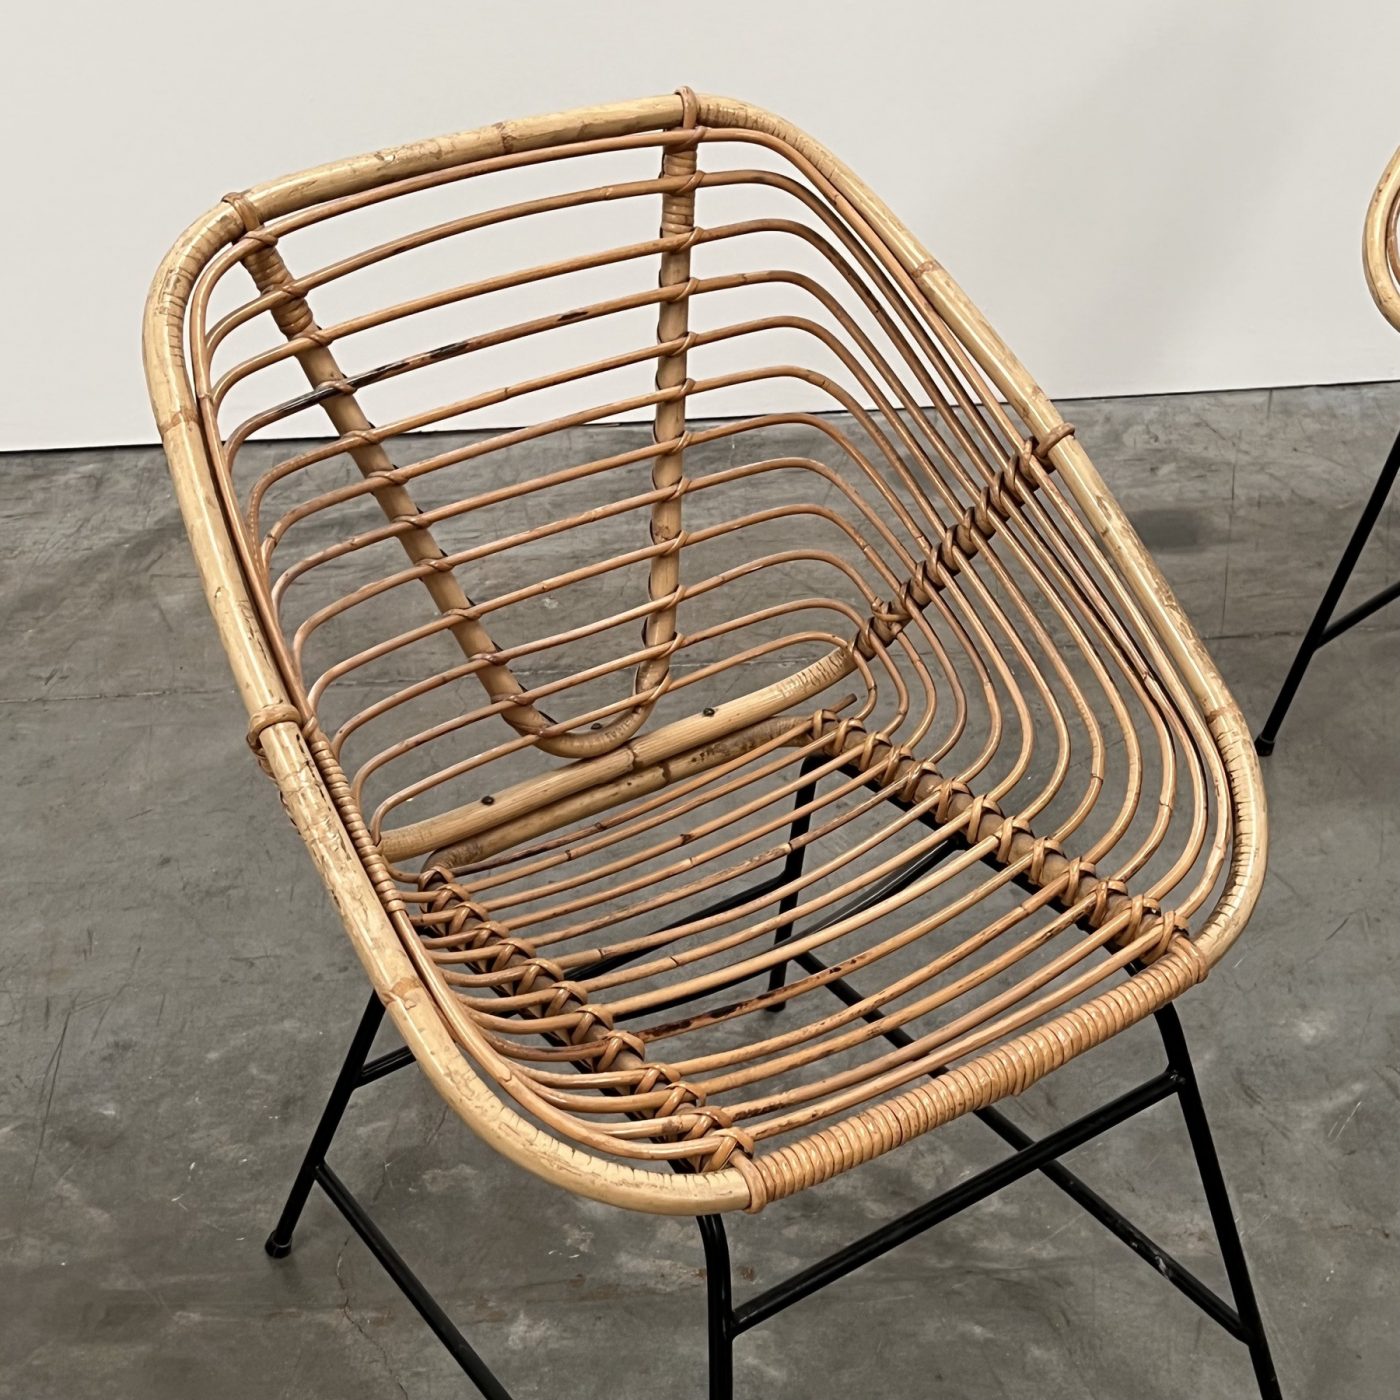 objet-vagabond-rattan-armchairs0004